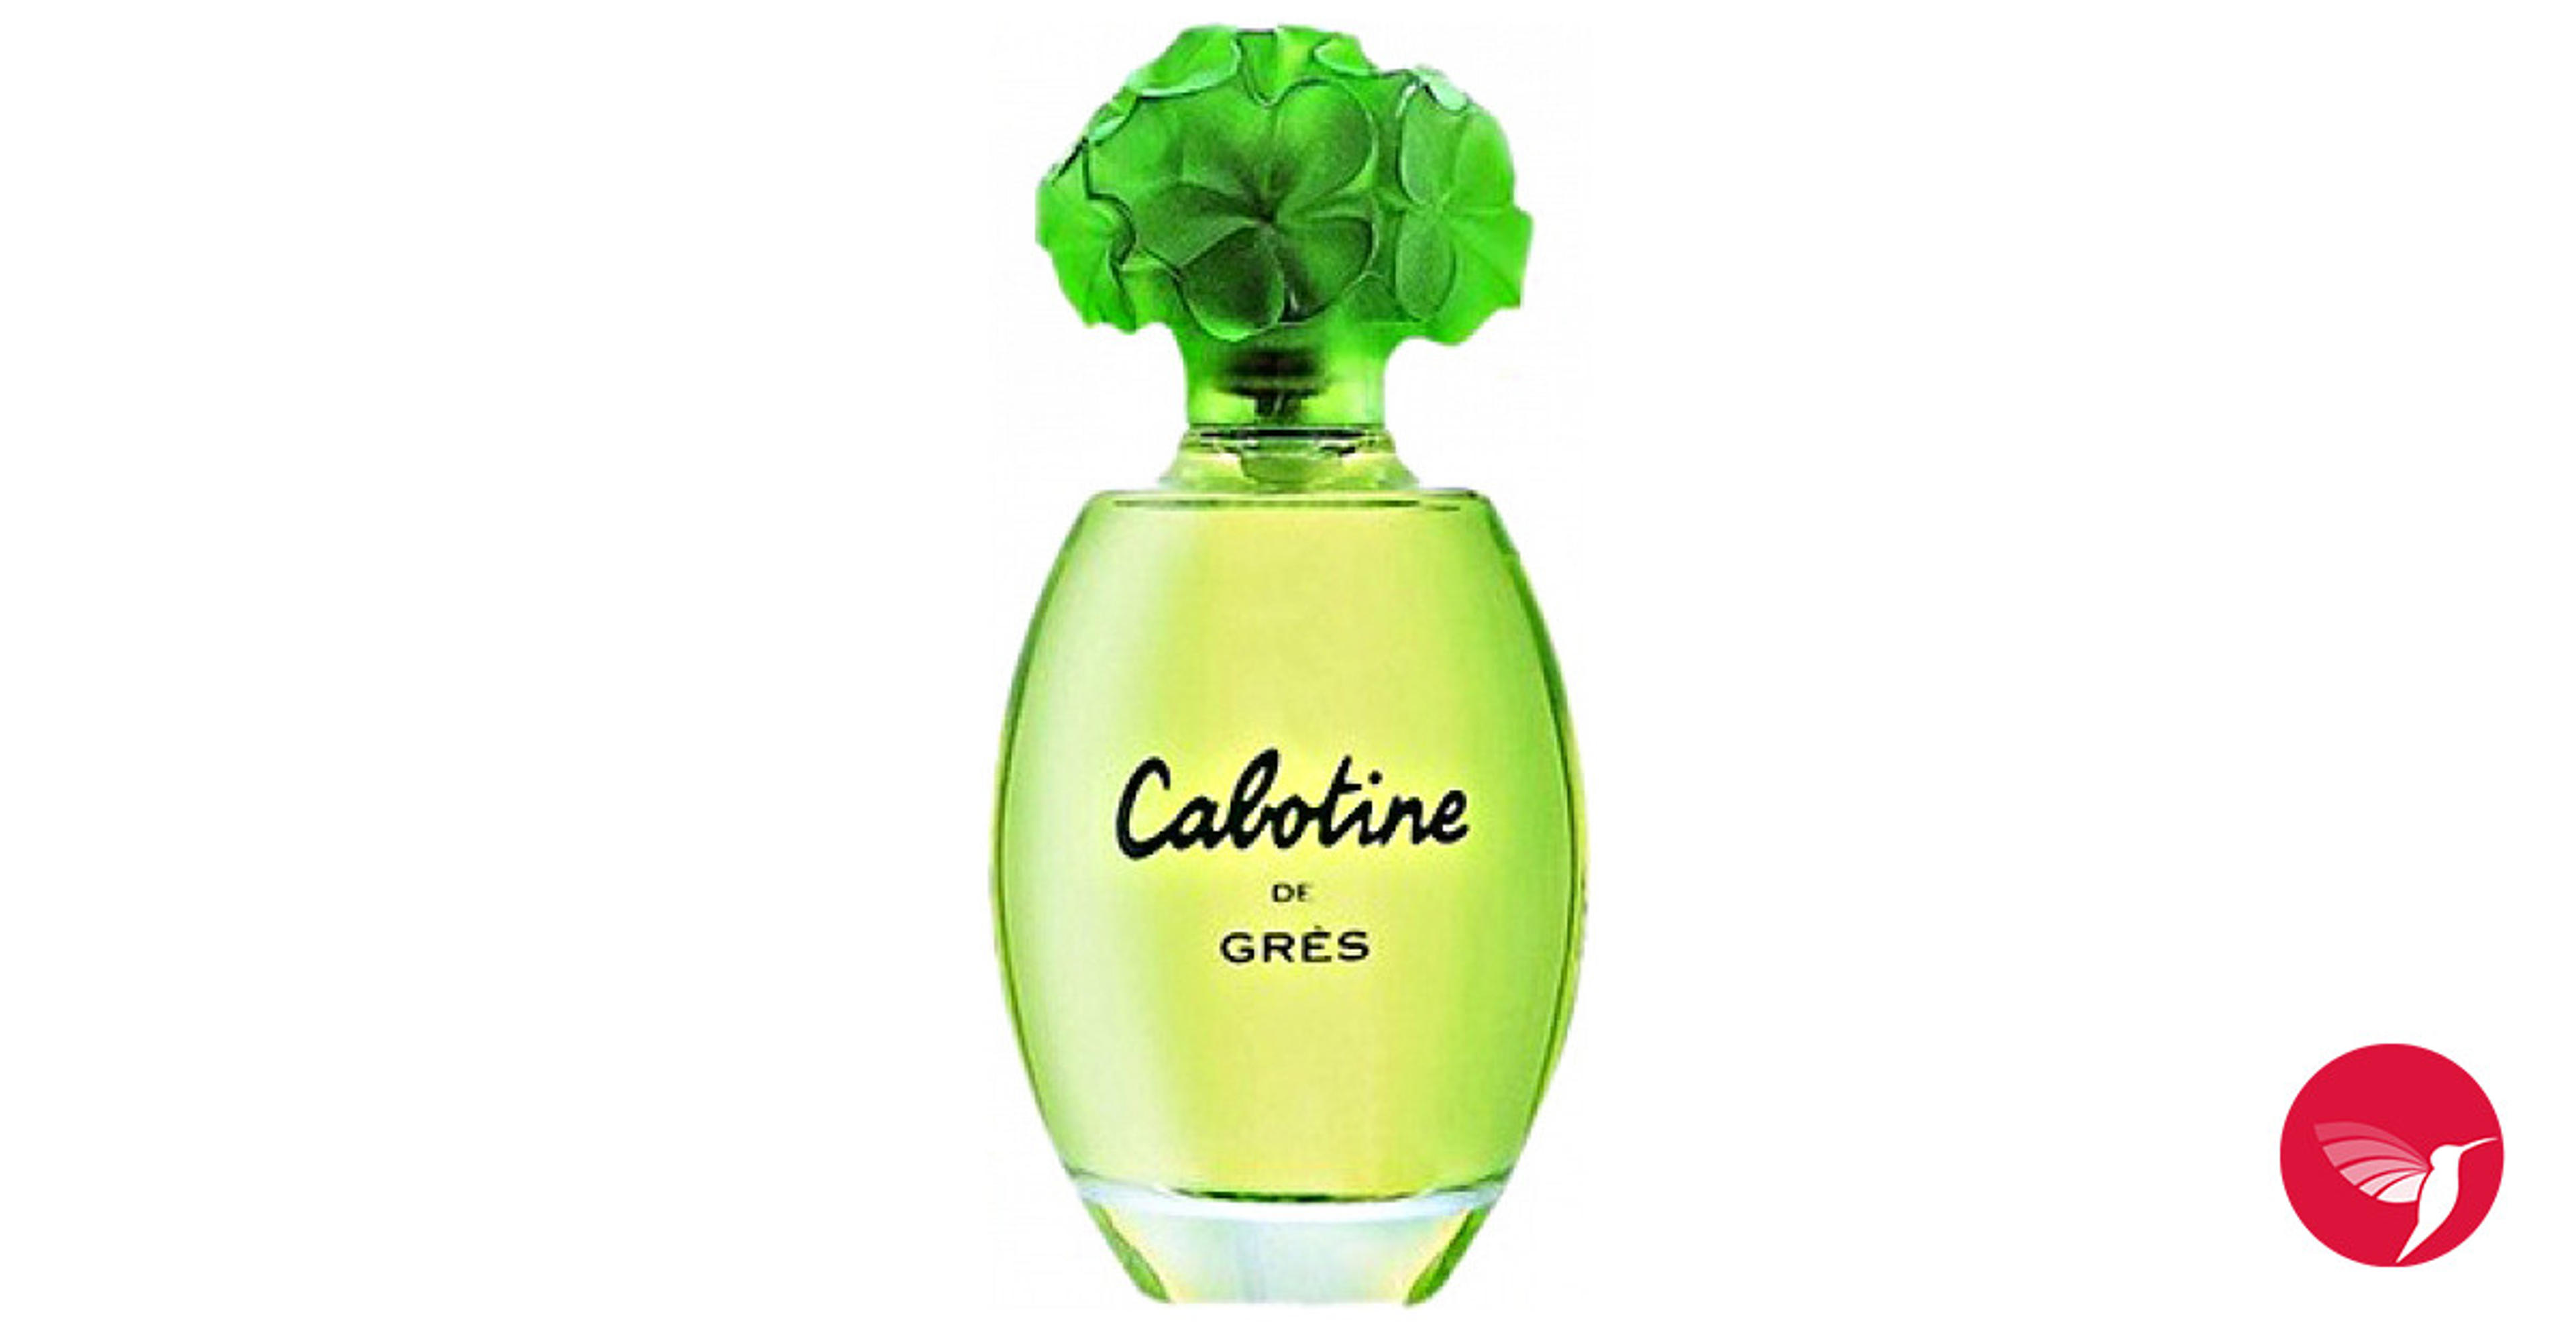 Cabotine Grès perfume - a fragrance for women 1990